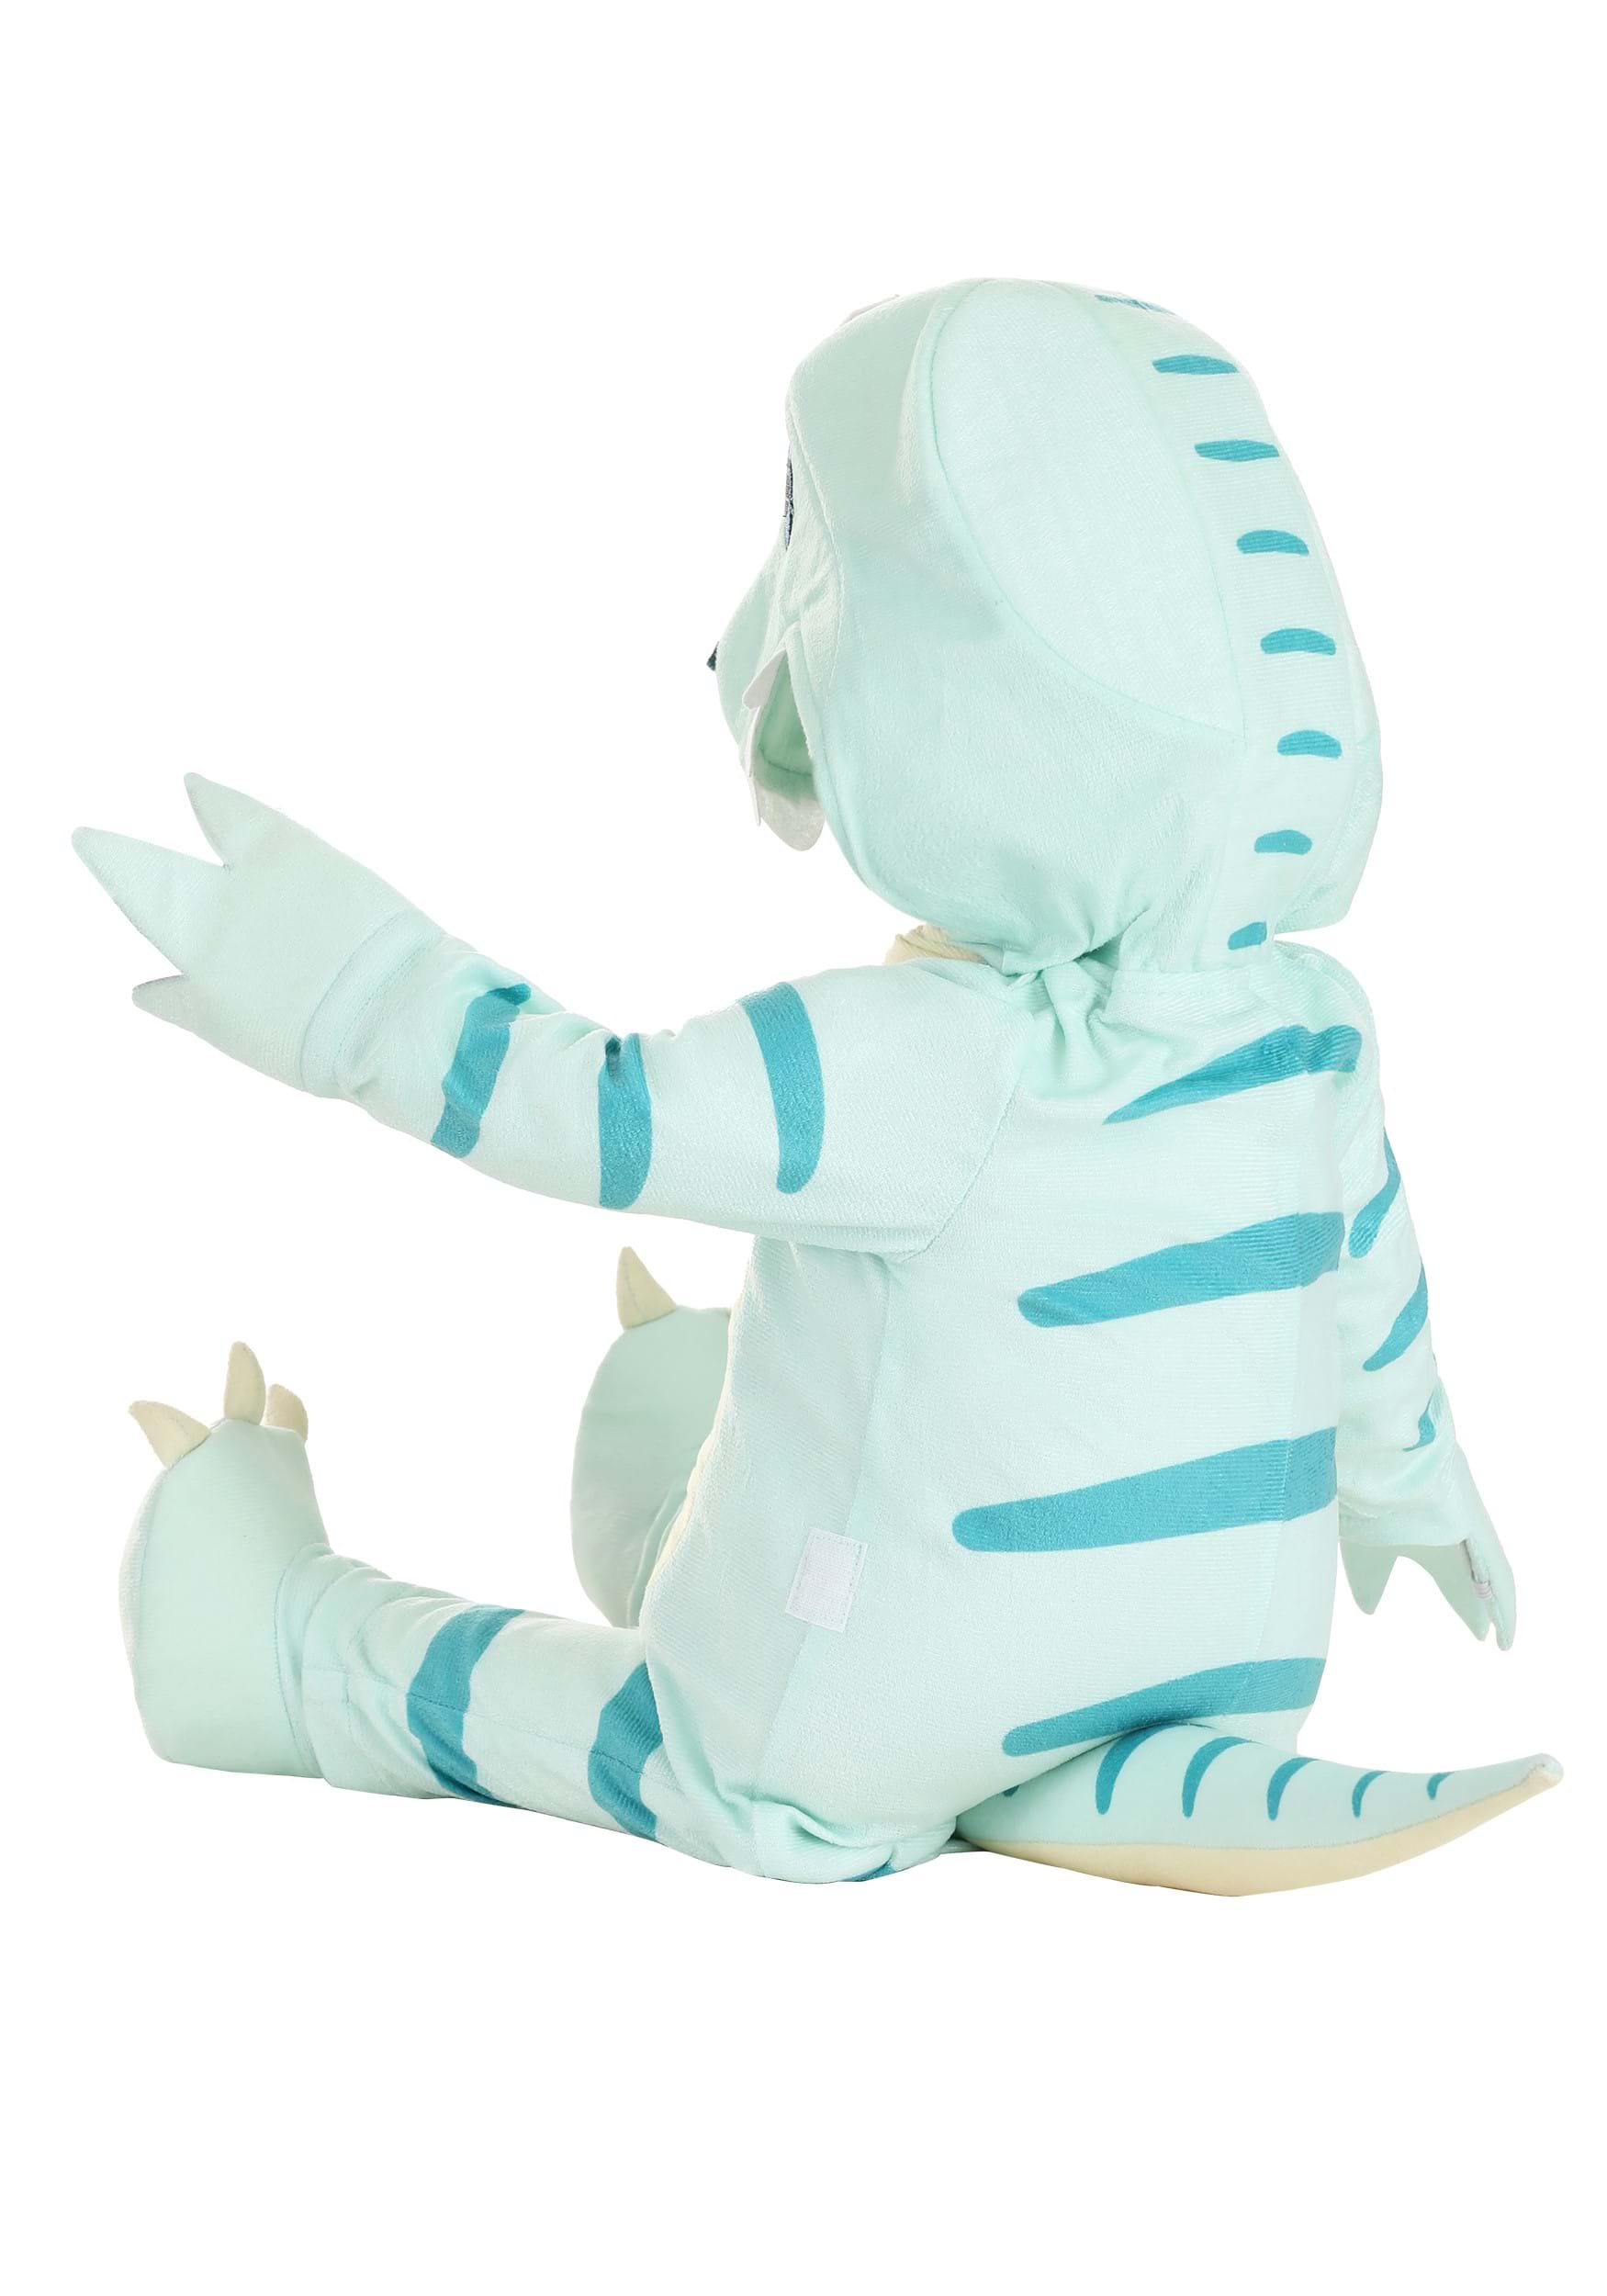 Freshly Hatched Dinosaur Infant Costume